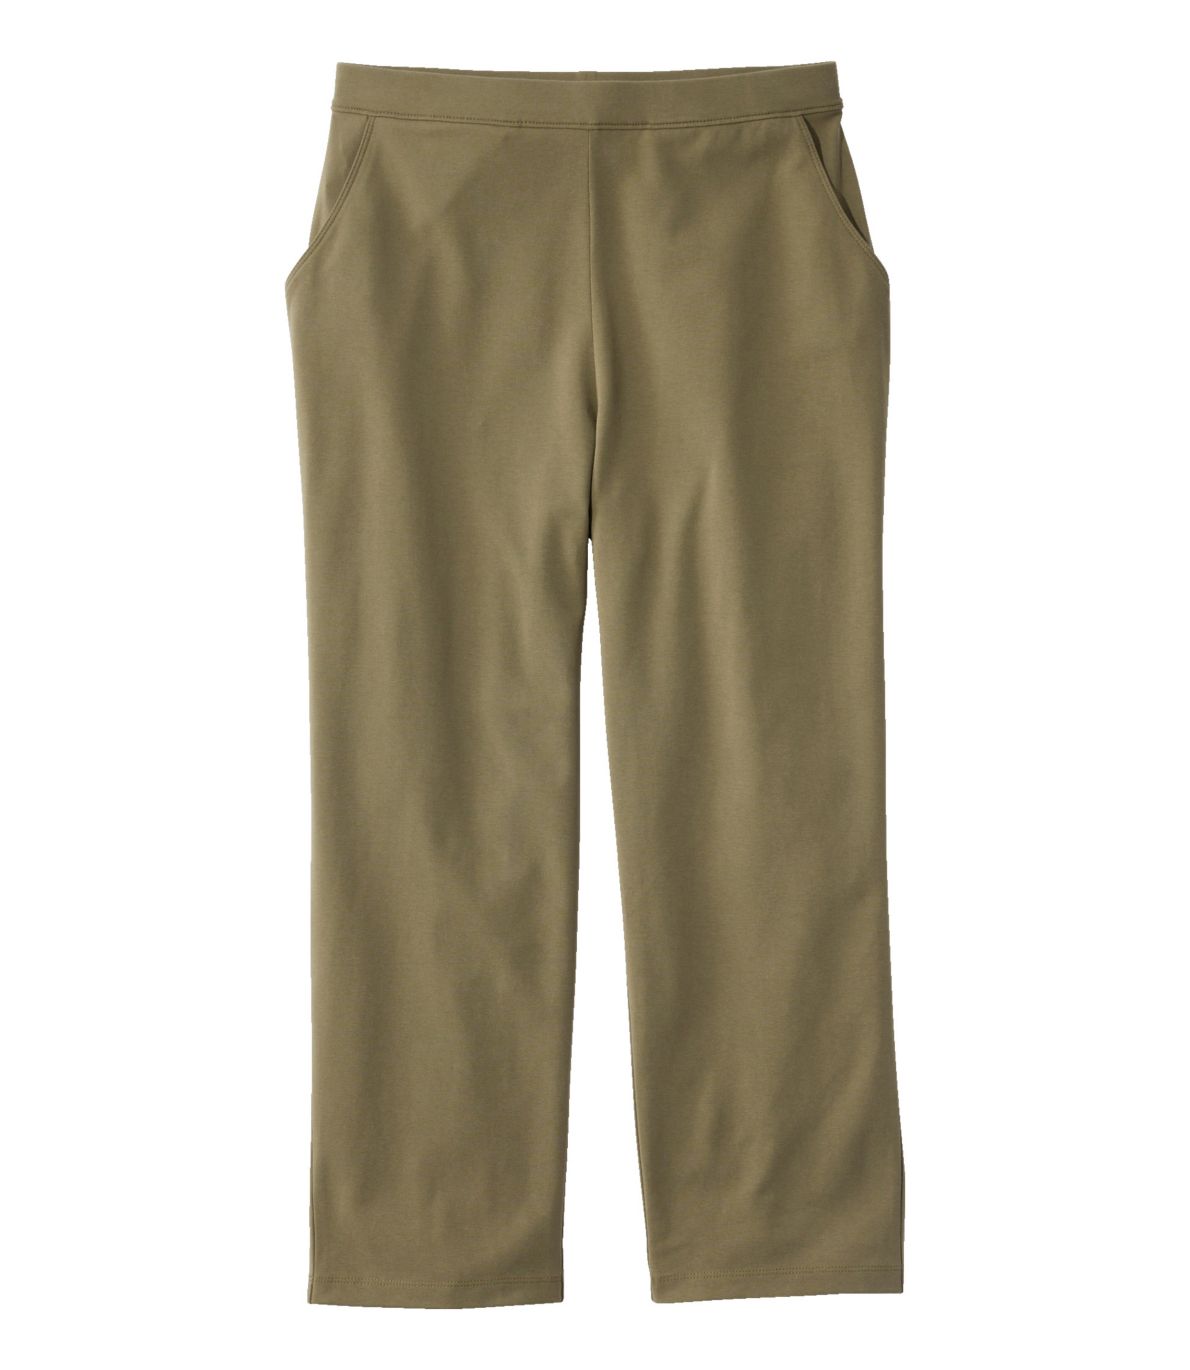 Perfect Fit Pants, Straight-Leg Crop at L.L. Bean